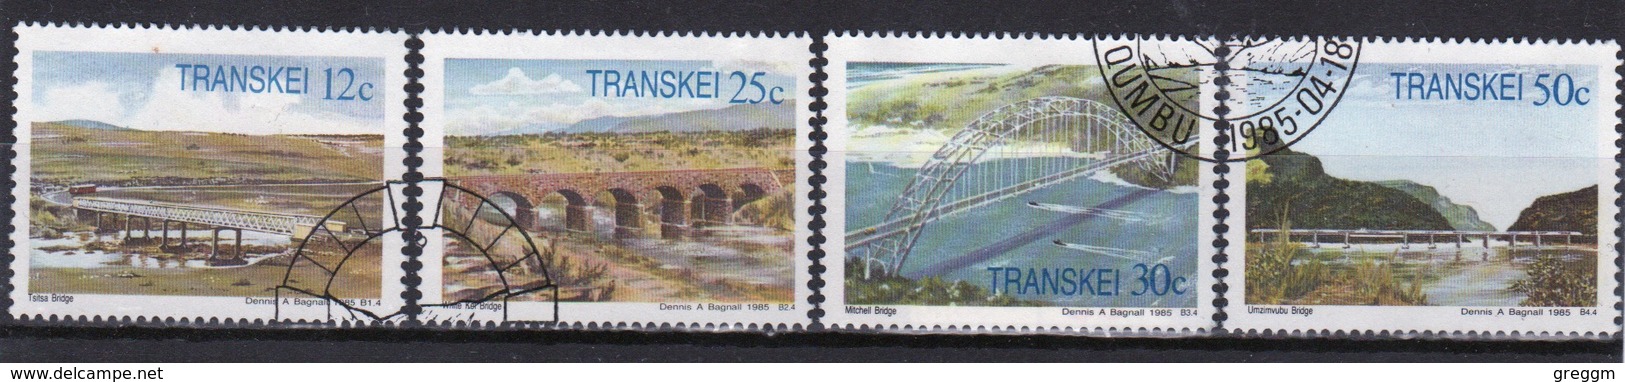 Transkei 1985 Set Of Stamps To Celebrate Bridges. - Transkei